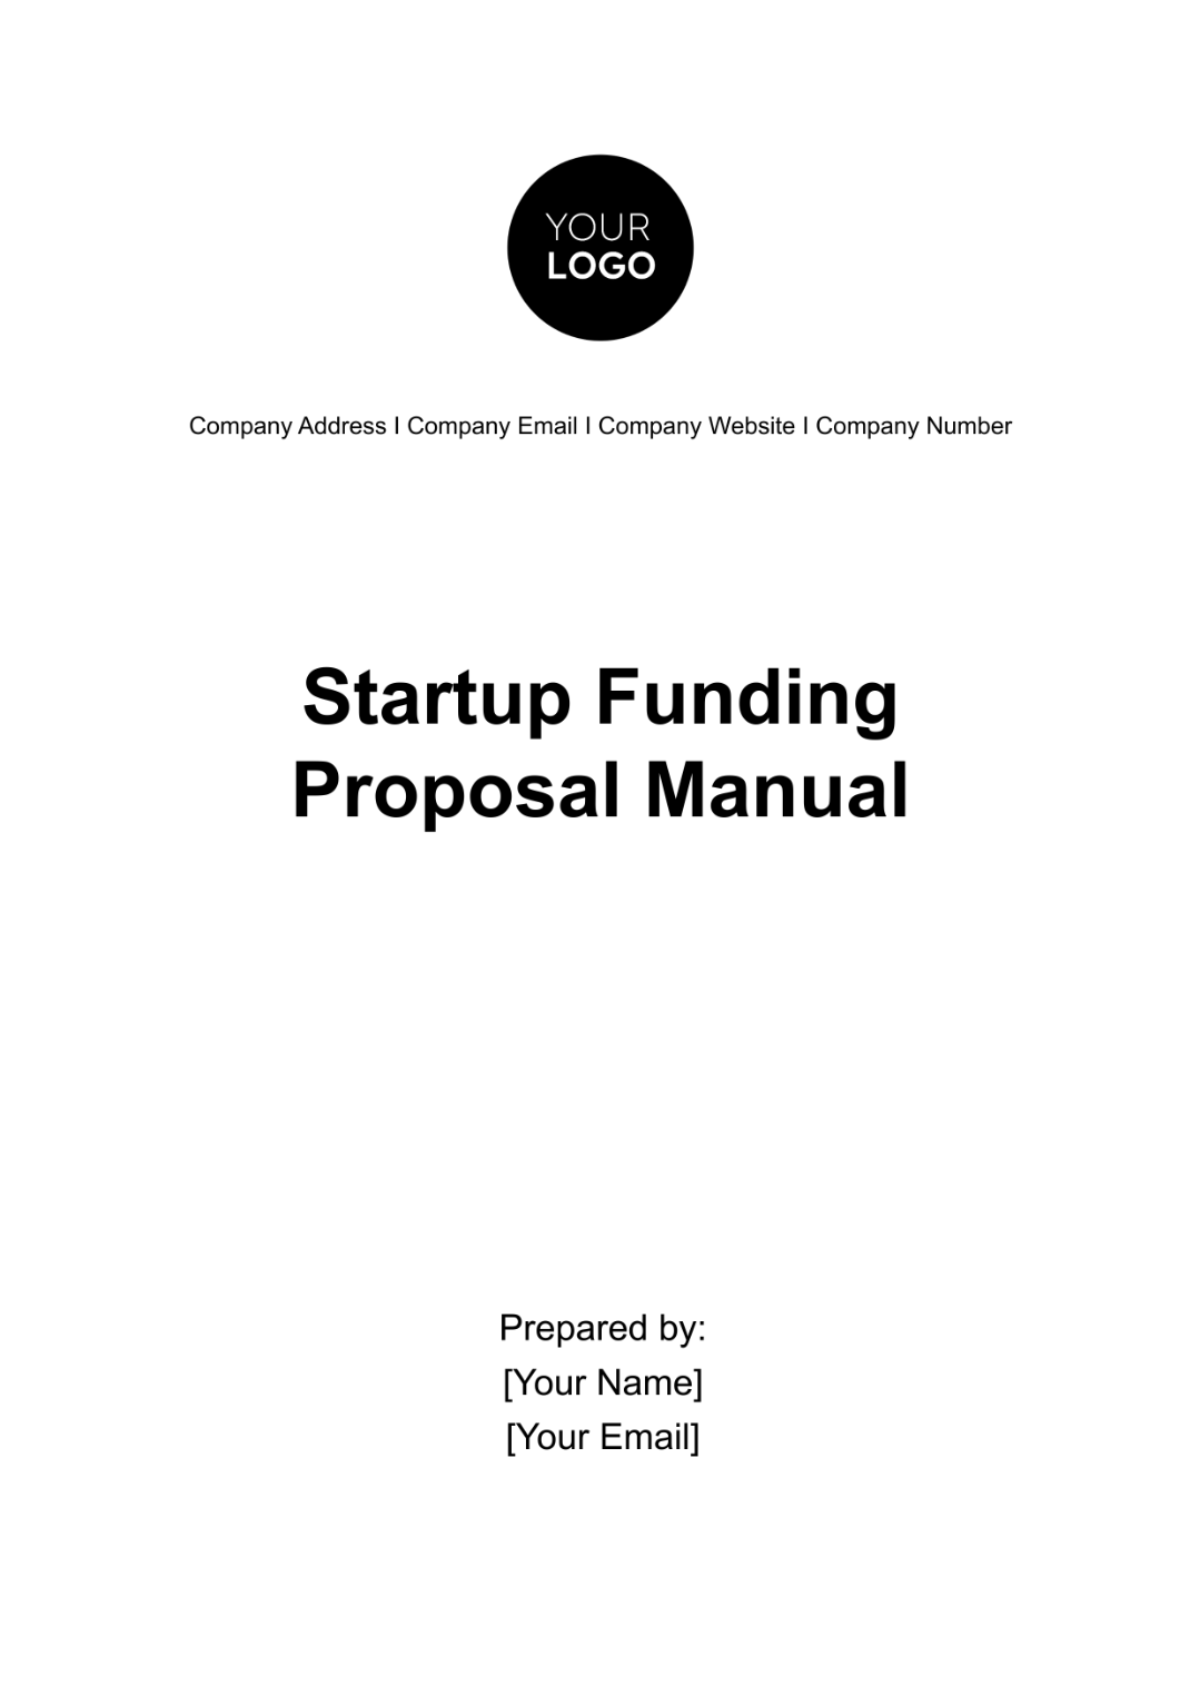 Startup Funding Proposal Manual Template